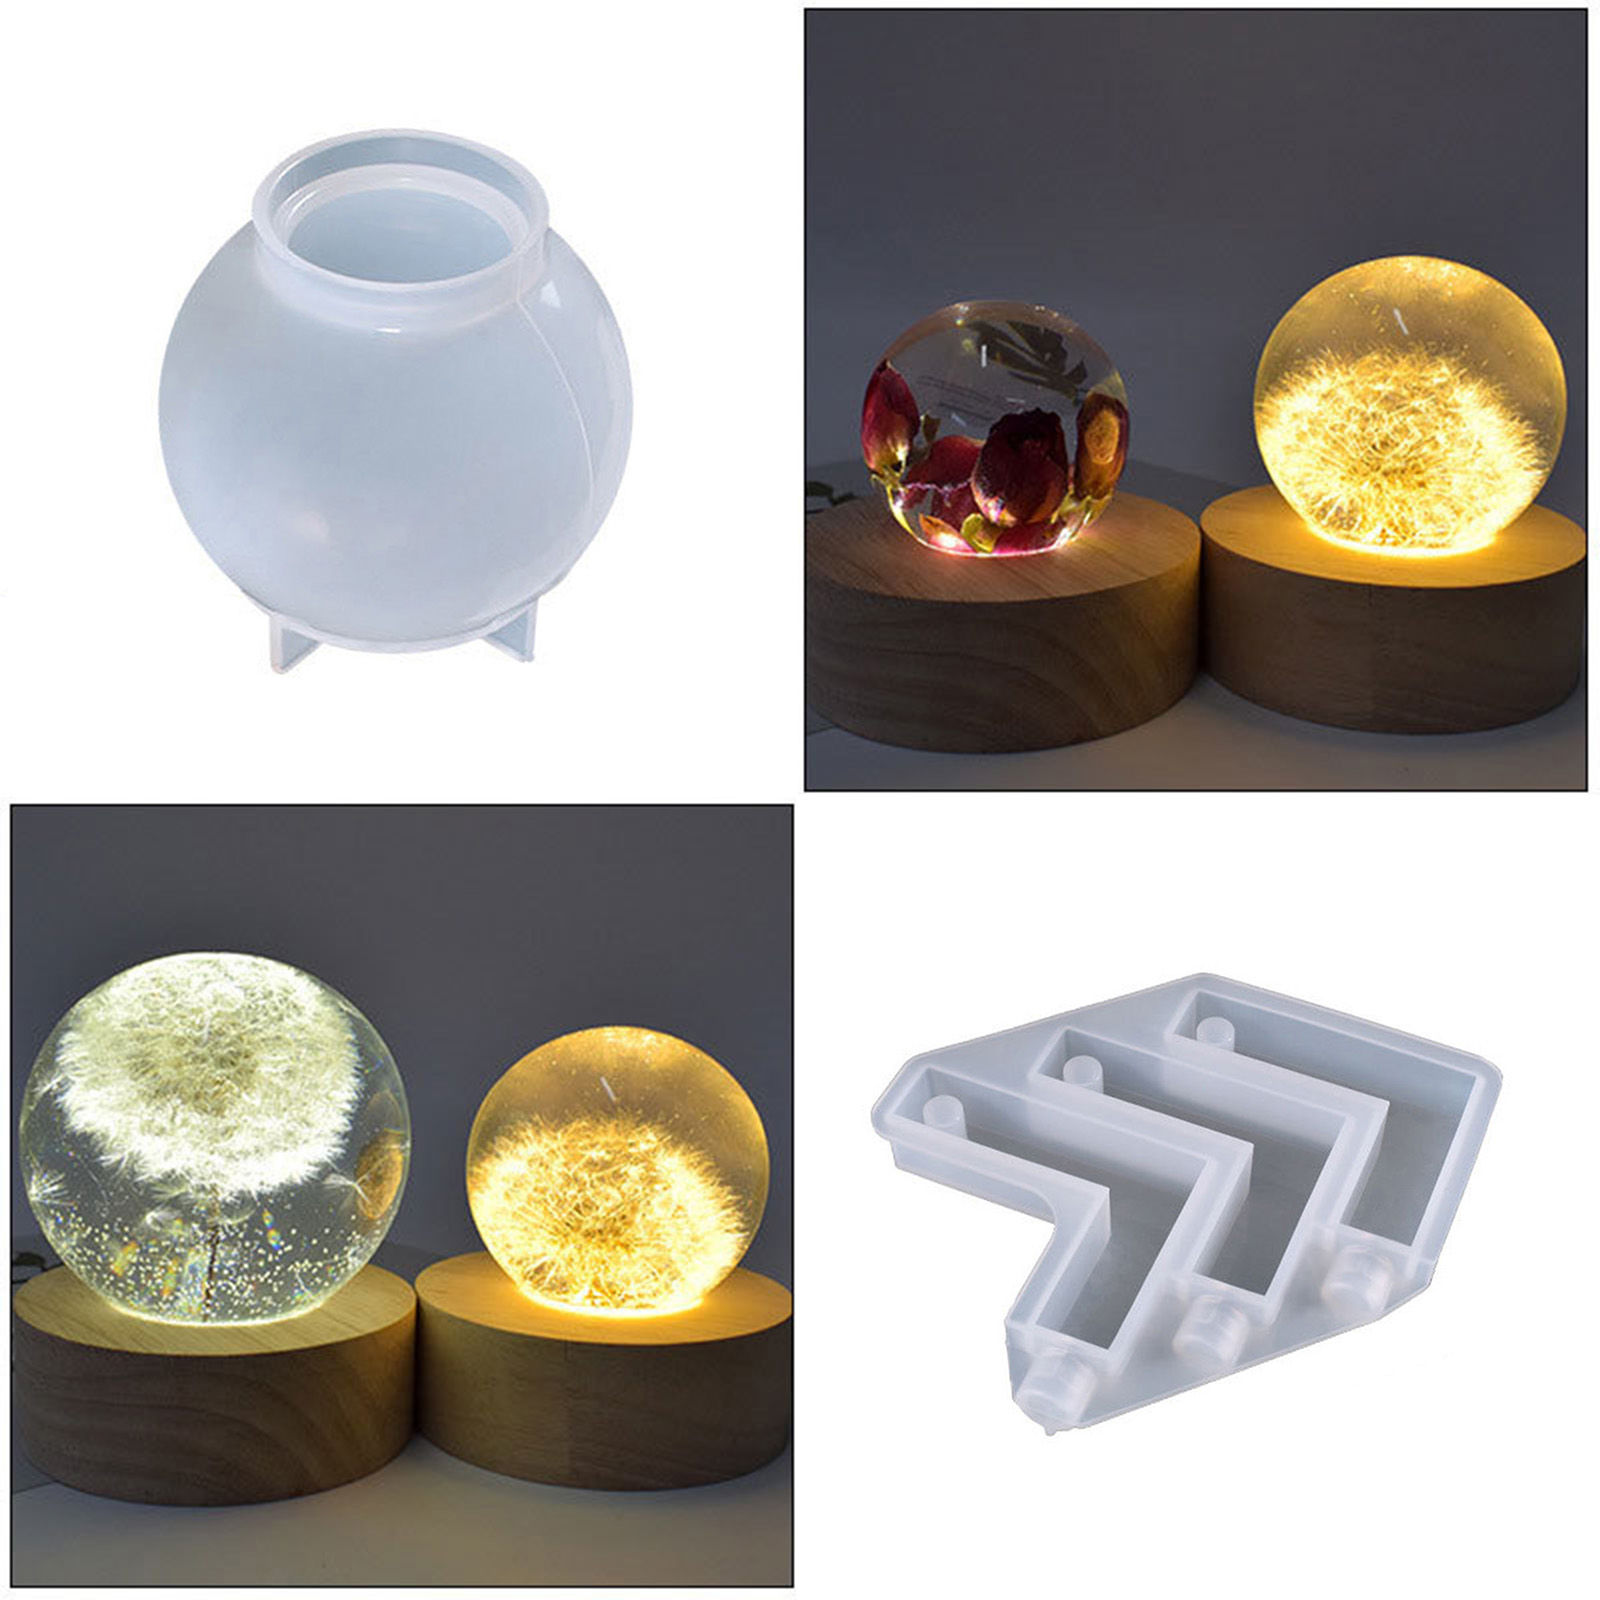 Immagine di Sphere Silicone Resin Mold For DIY Night Lamp